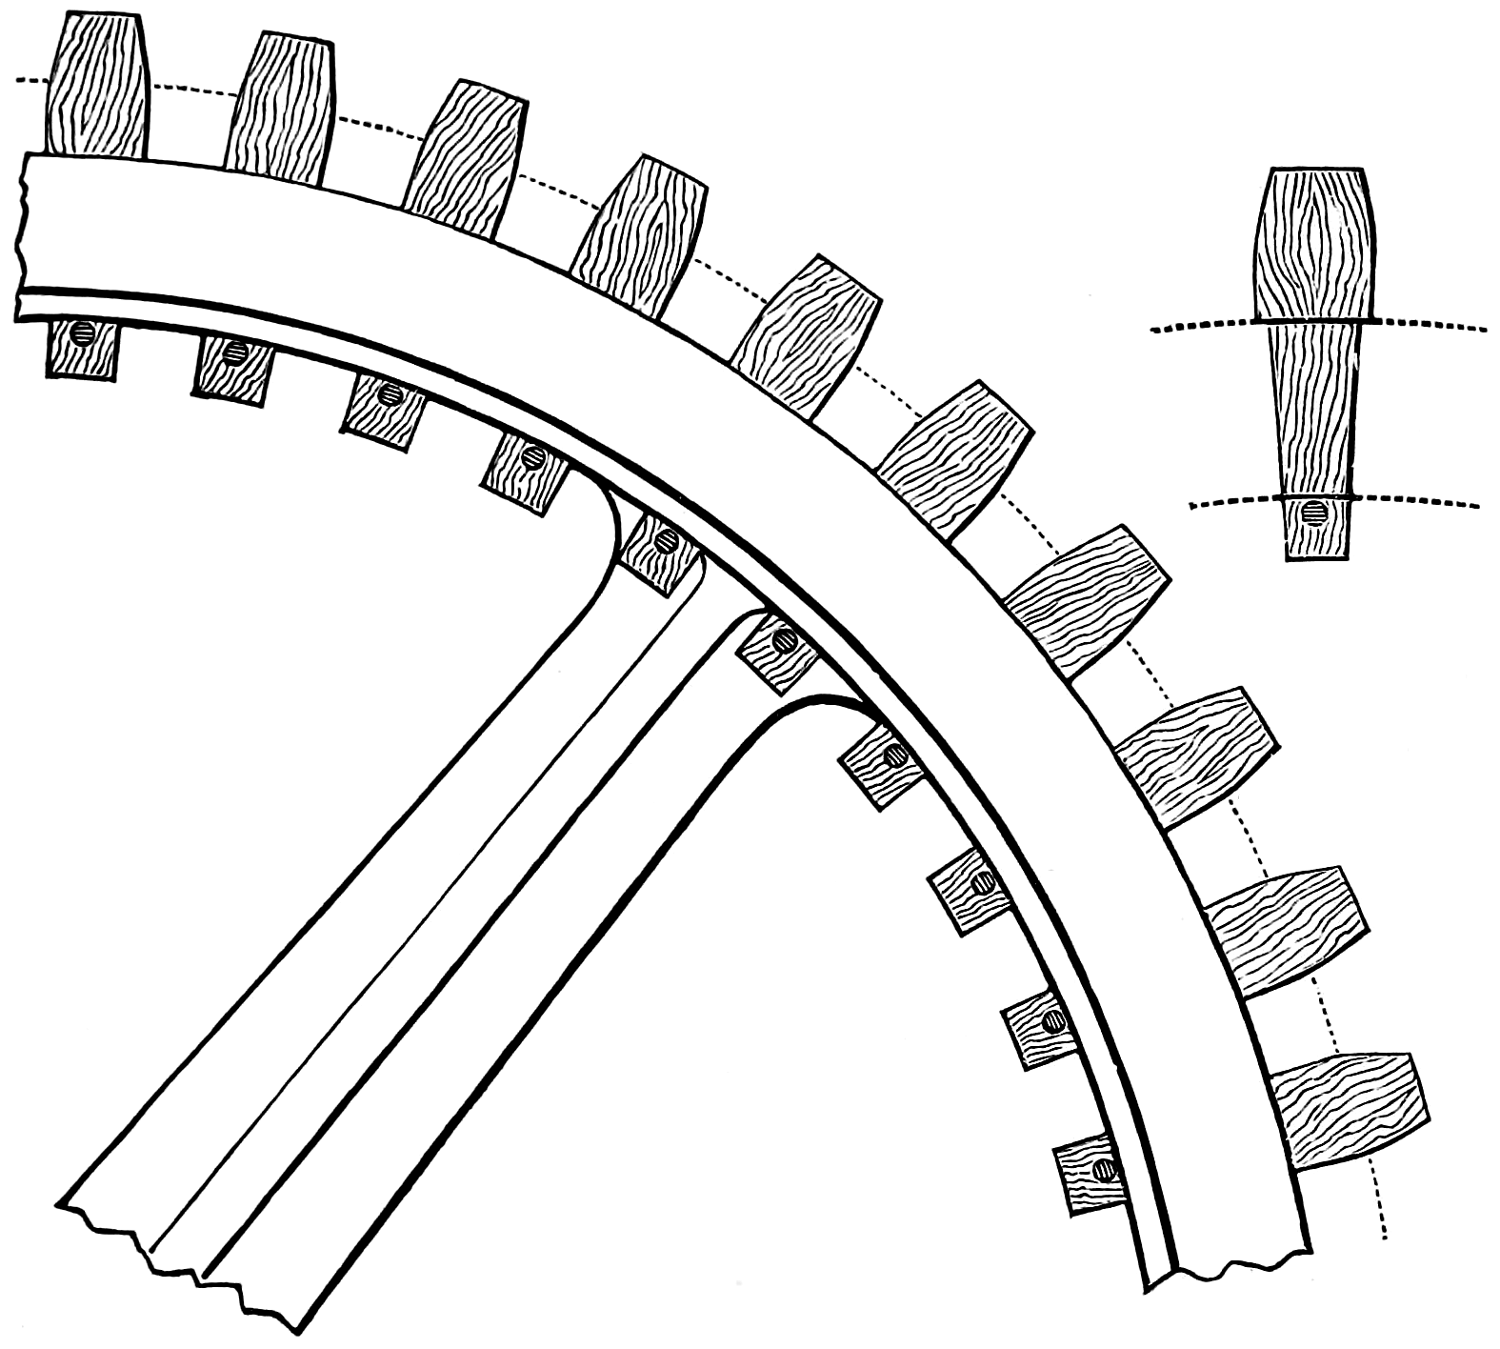 Spur mortise wheel